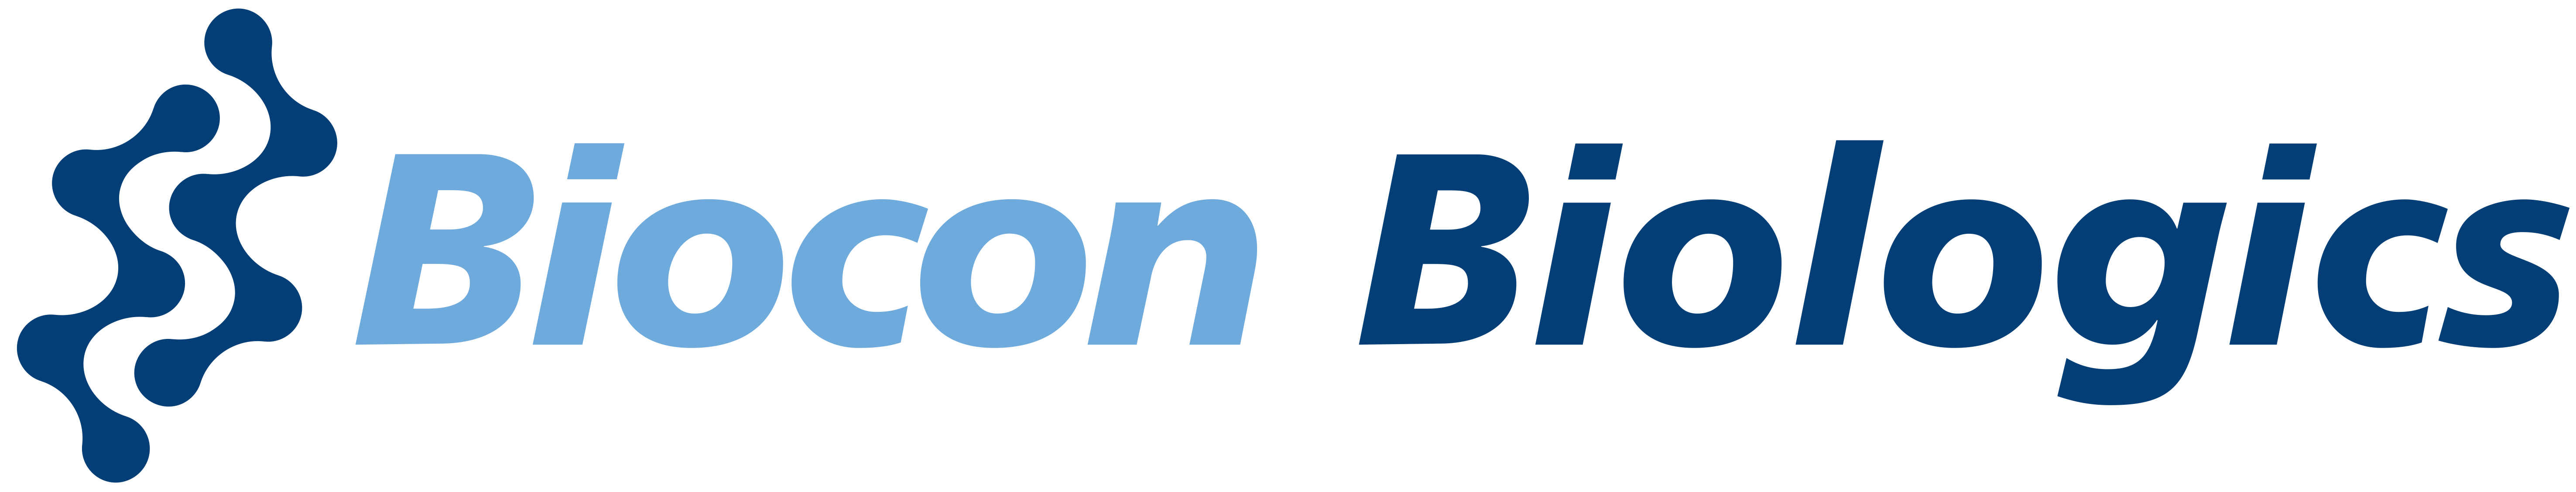 Biocon Biocologics Logo